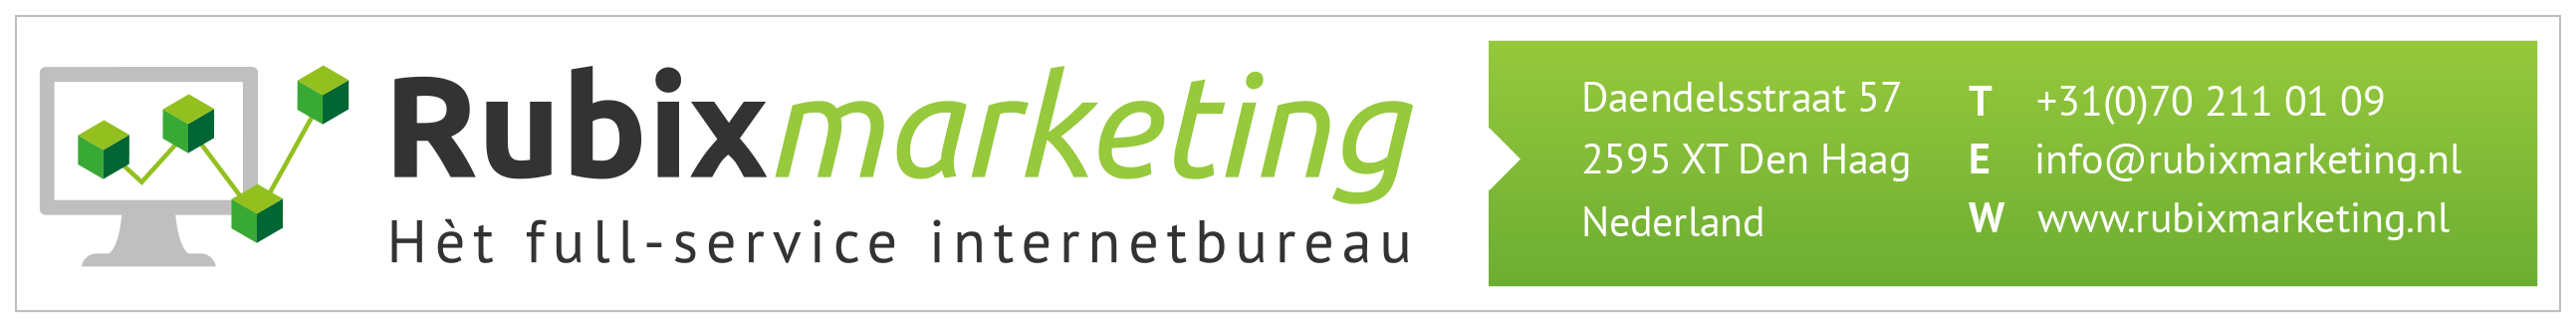 Rubix Marketing logo